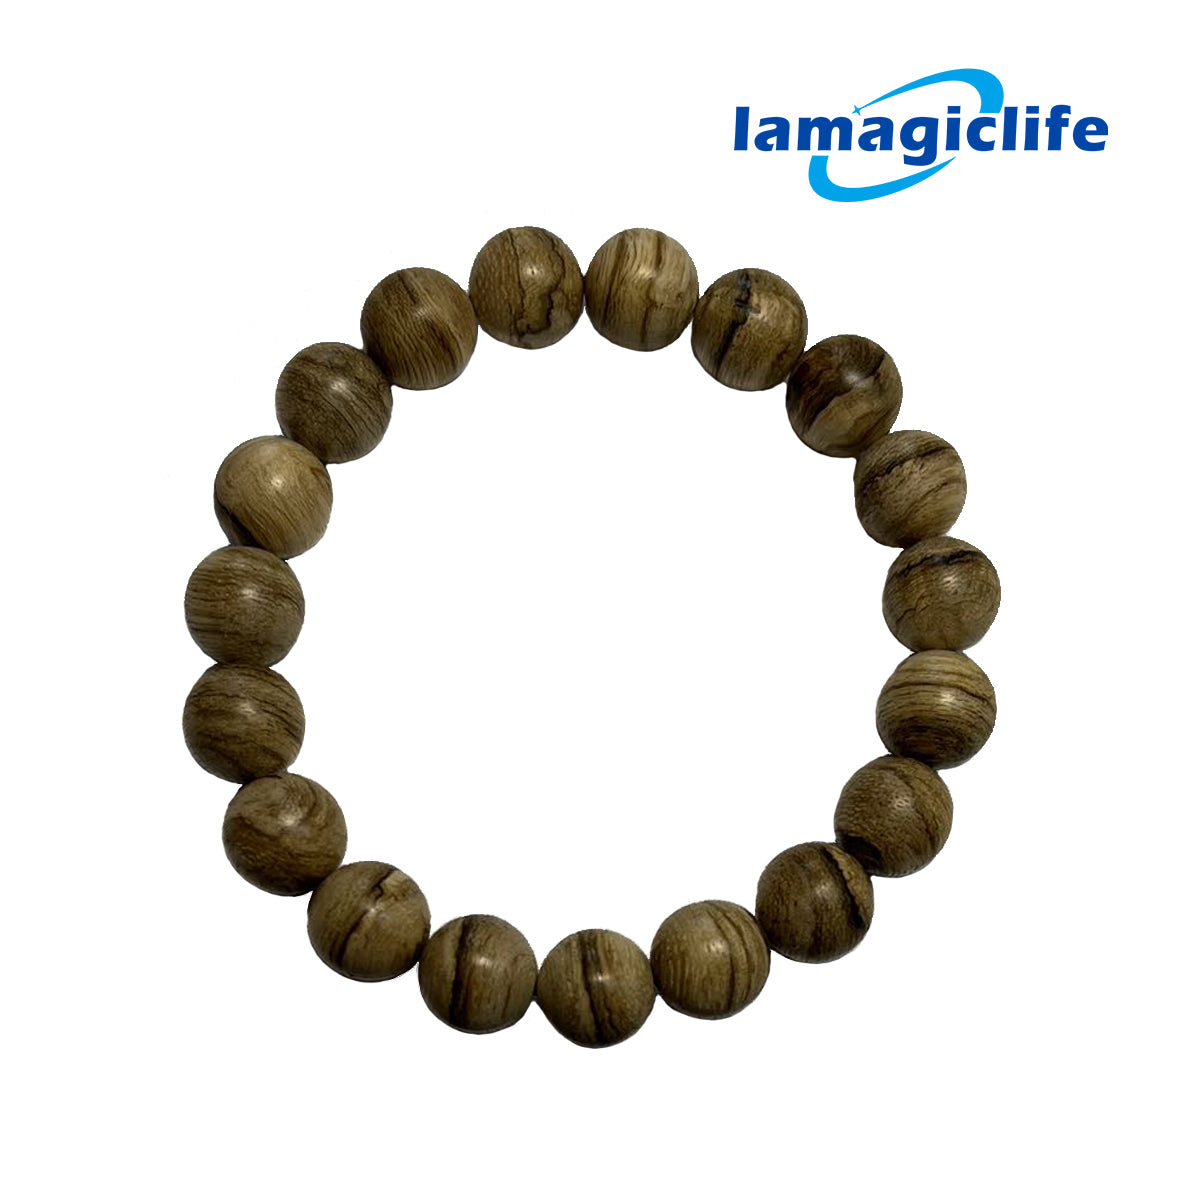 Lamagiclife Artisan Crafted 19-Bead Hainan Agarwood Prayer Bracelet